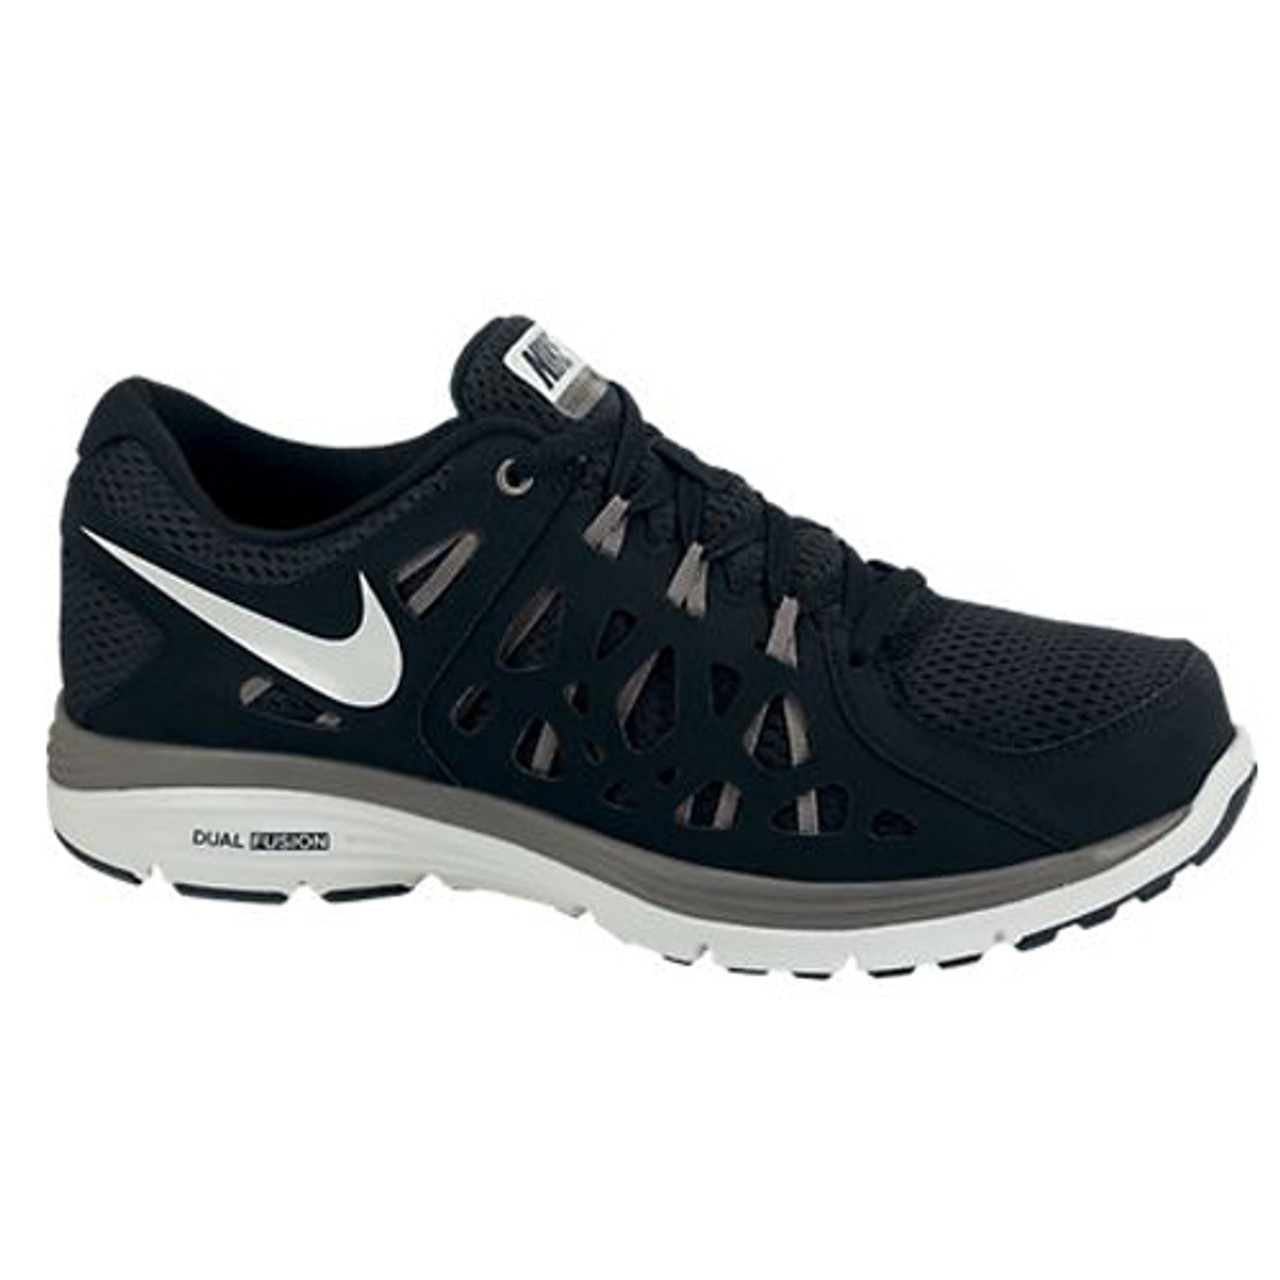 Nike Dual Run 2 Black/White Running Shoes - | Discount Men's Athletic & More - Shoolu.com | Shoolu.com